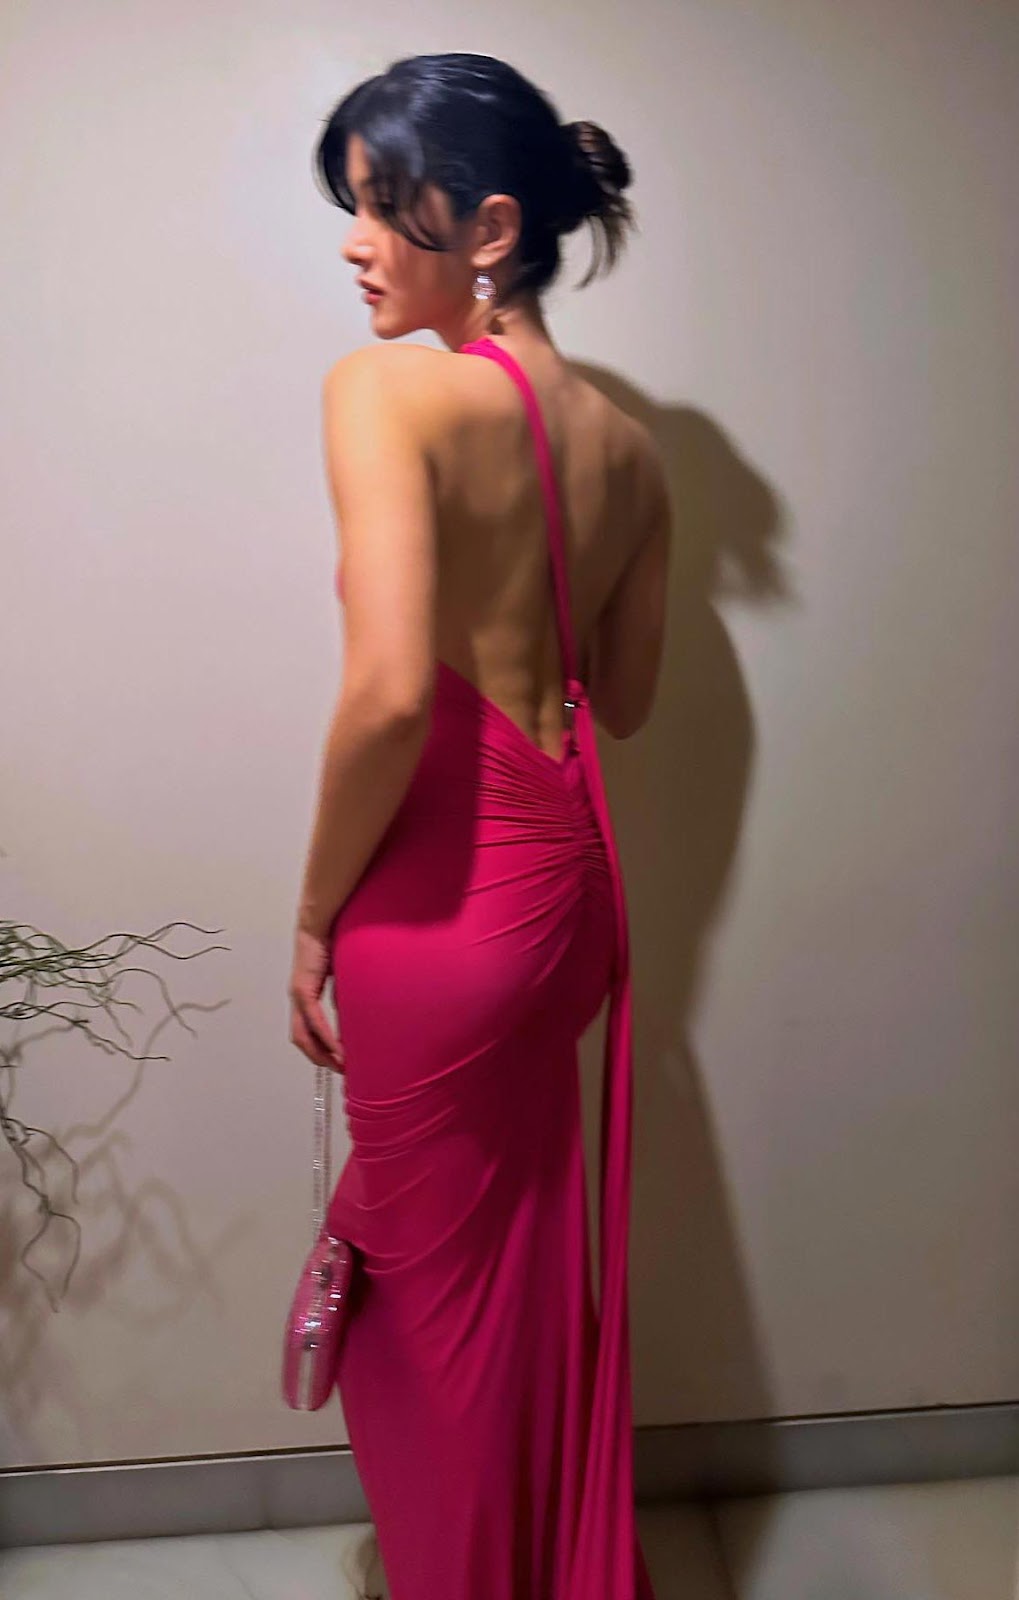 Shanaya Kapoor backless tight pink dress hot actress